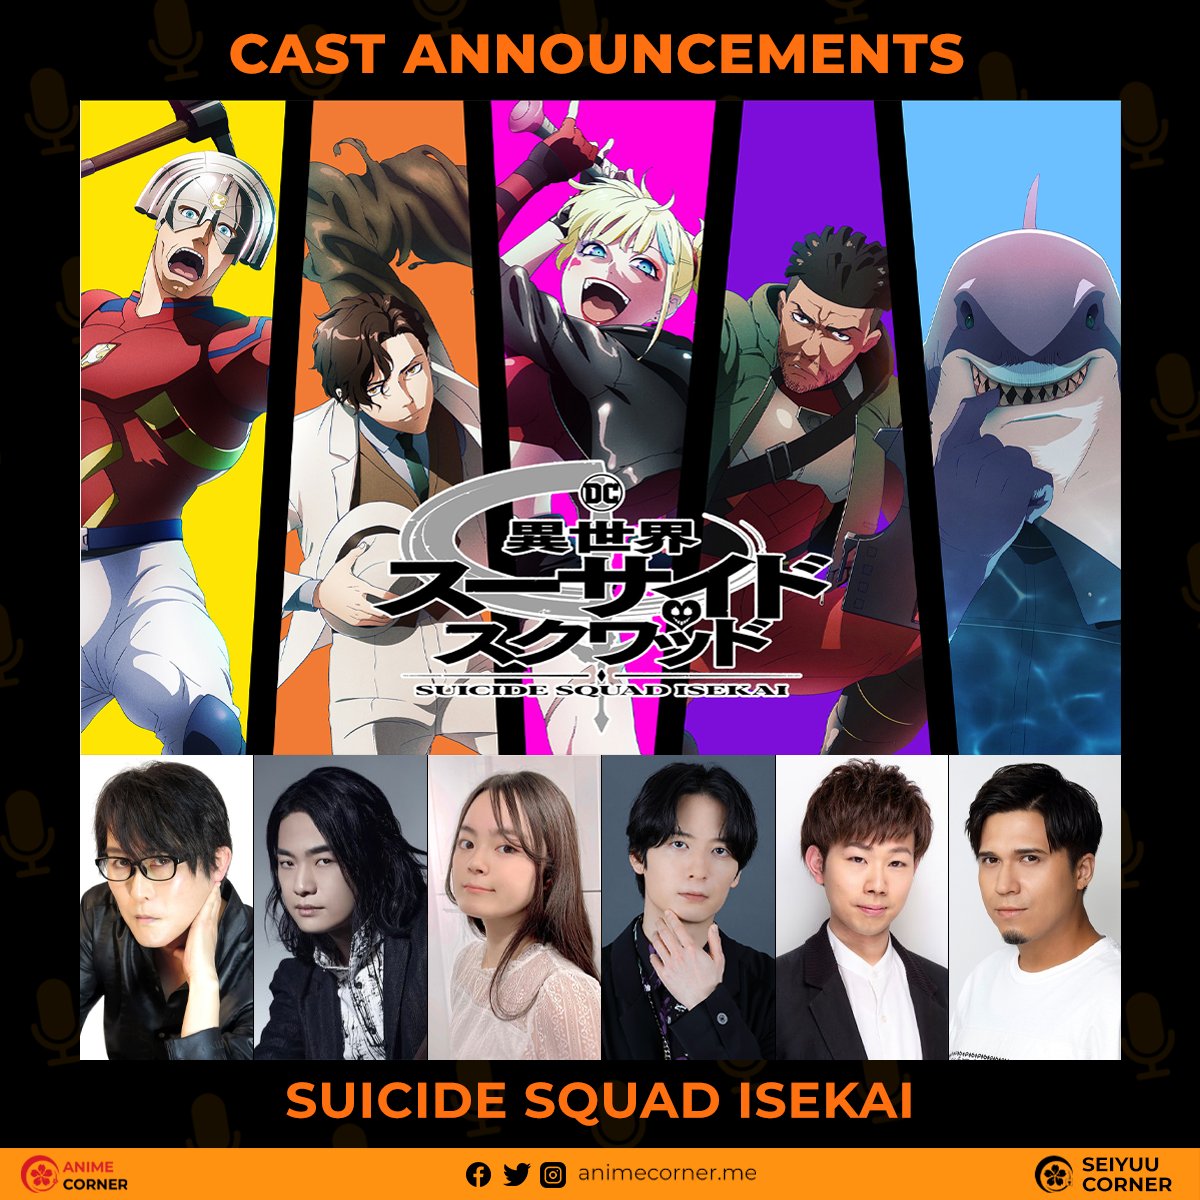 Seiyuu Corner on X: “Suicide Squad Isekai” anime cast: Anna Nagase as  Harley Quinn Yuichiro Umehara as the Joker Reigo Yamaguchi as Deadshot  Takehito Koyasu as Peacemaker Jun Fukuyama as Clayface Subaru